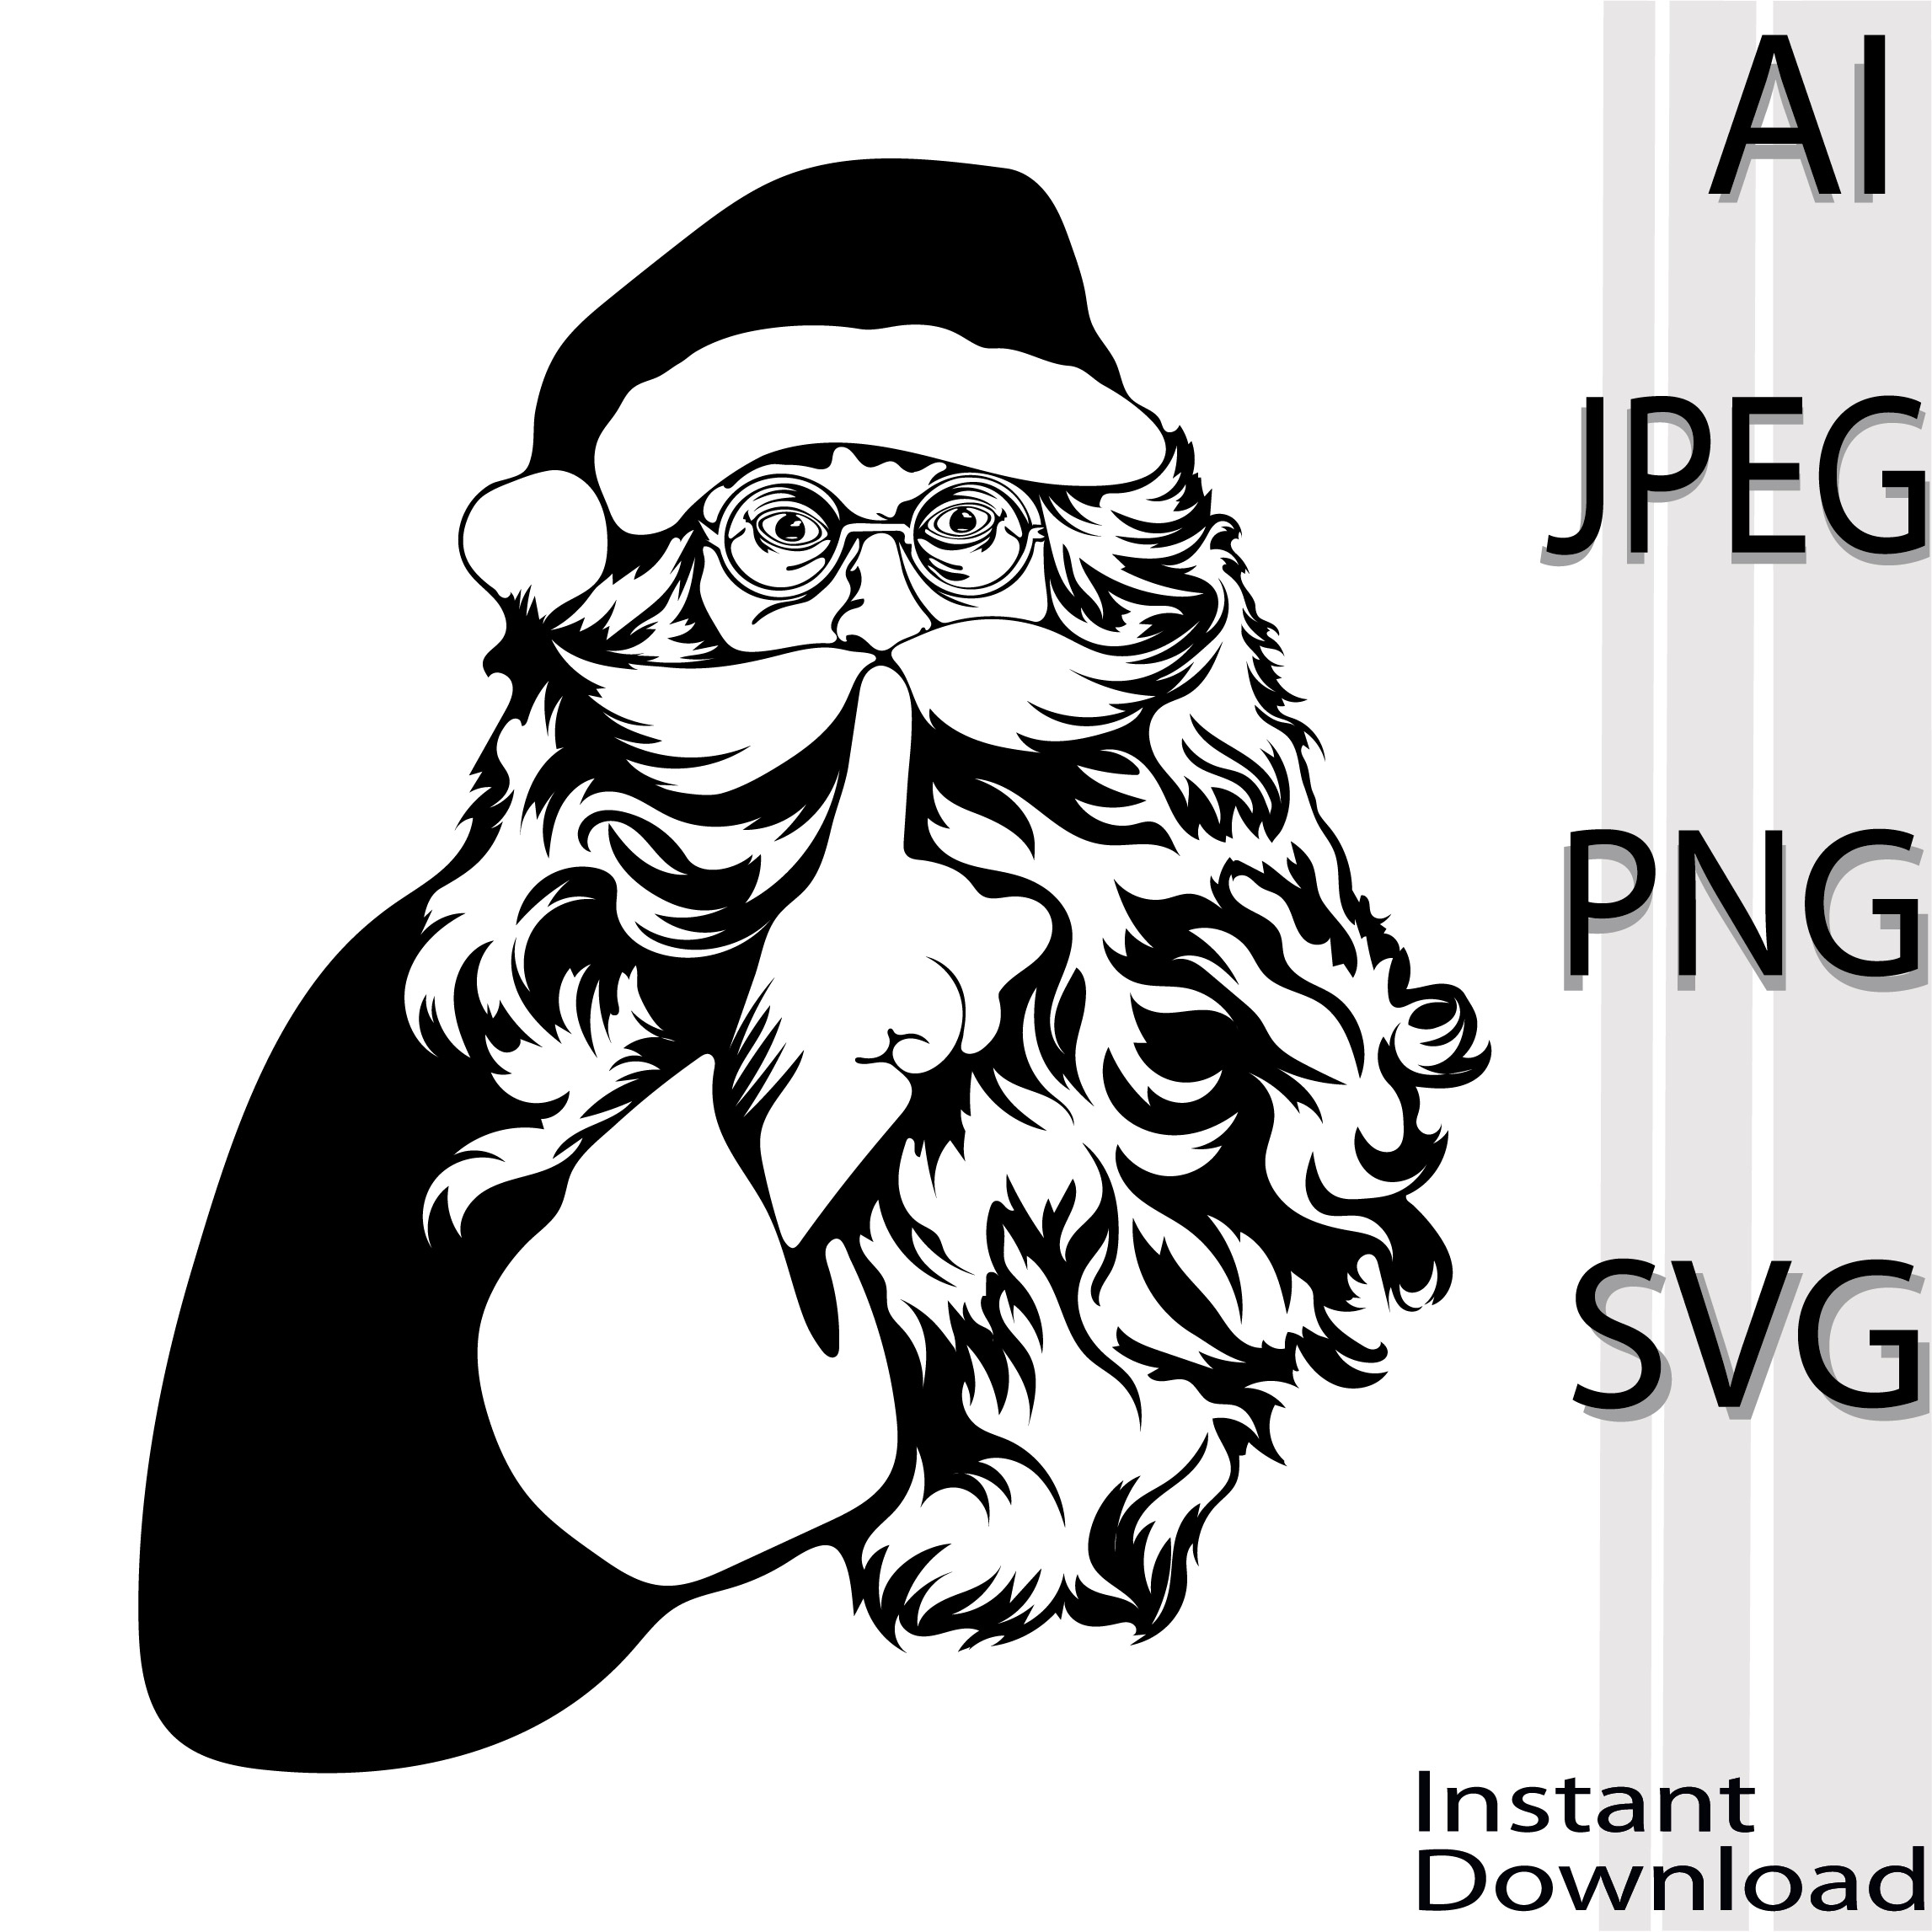 Santa Claus SVG Design cover image.